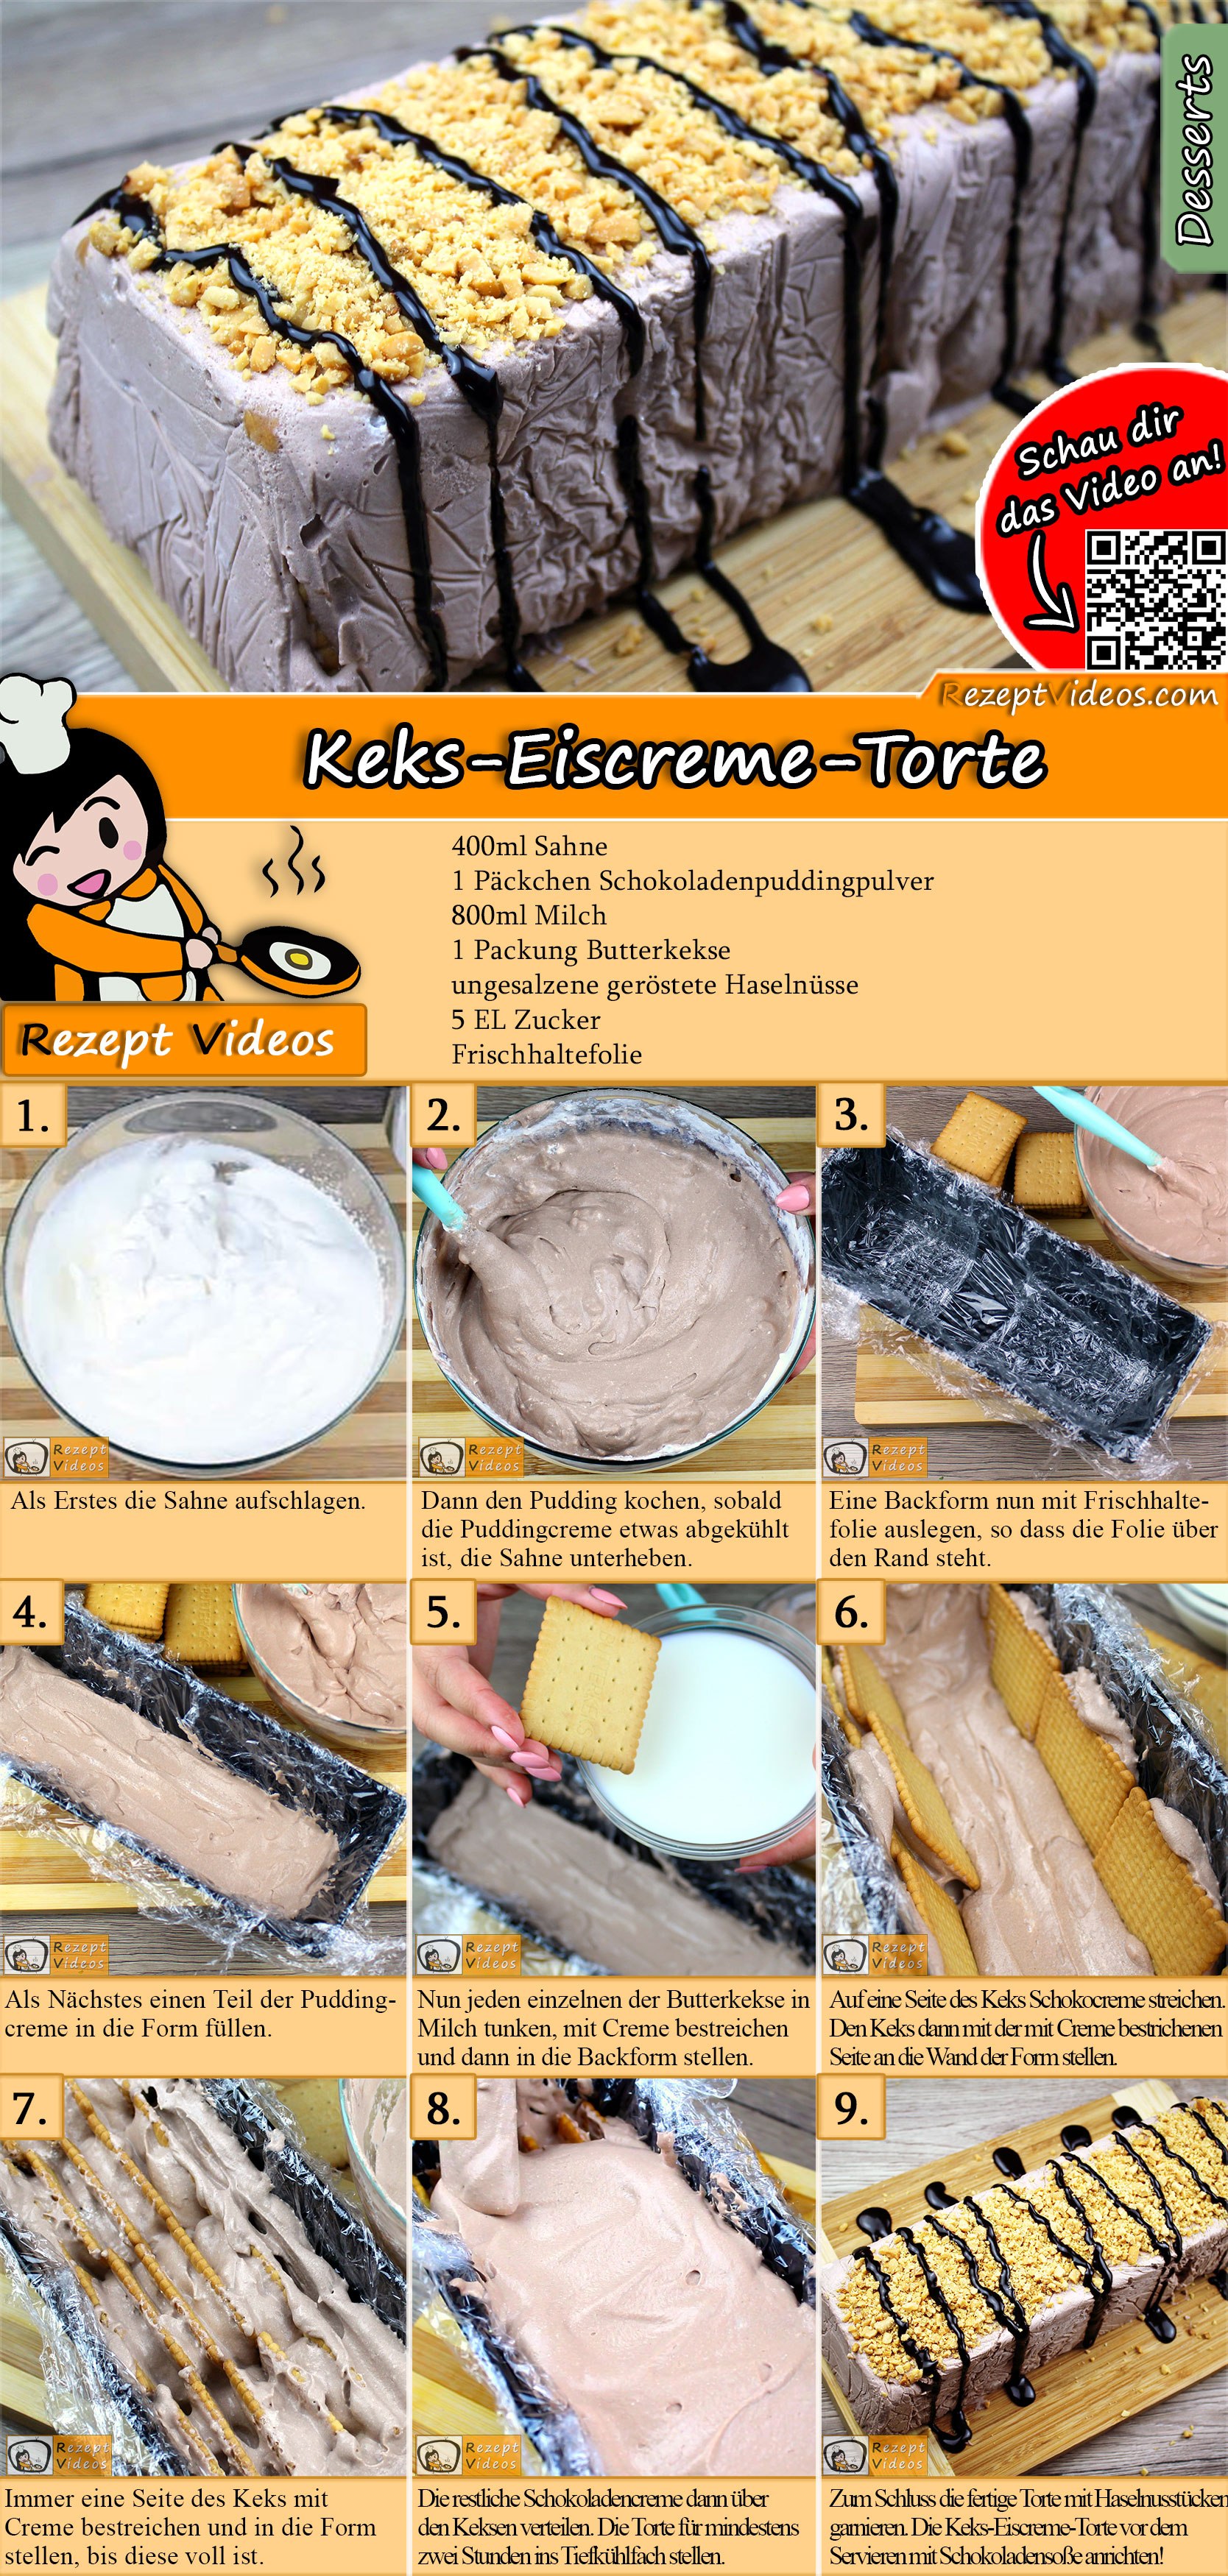 Keks-Eiscreme-Torte Rezept mit Video